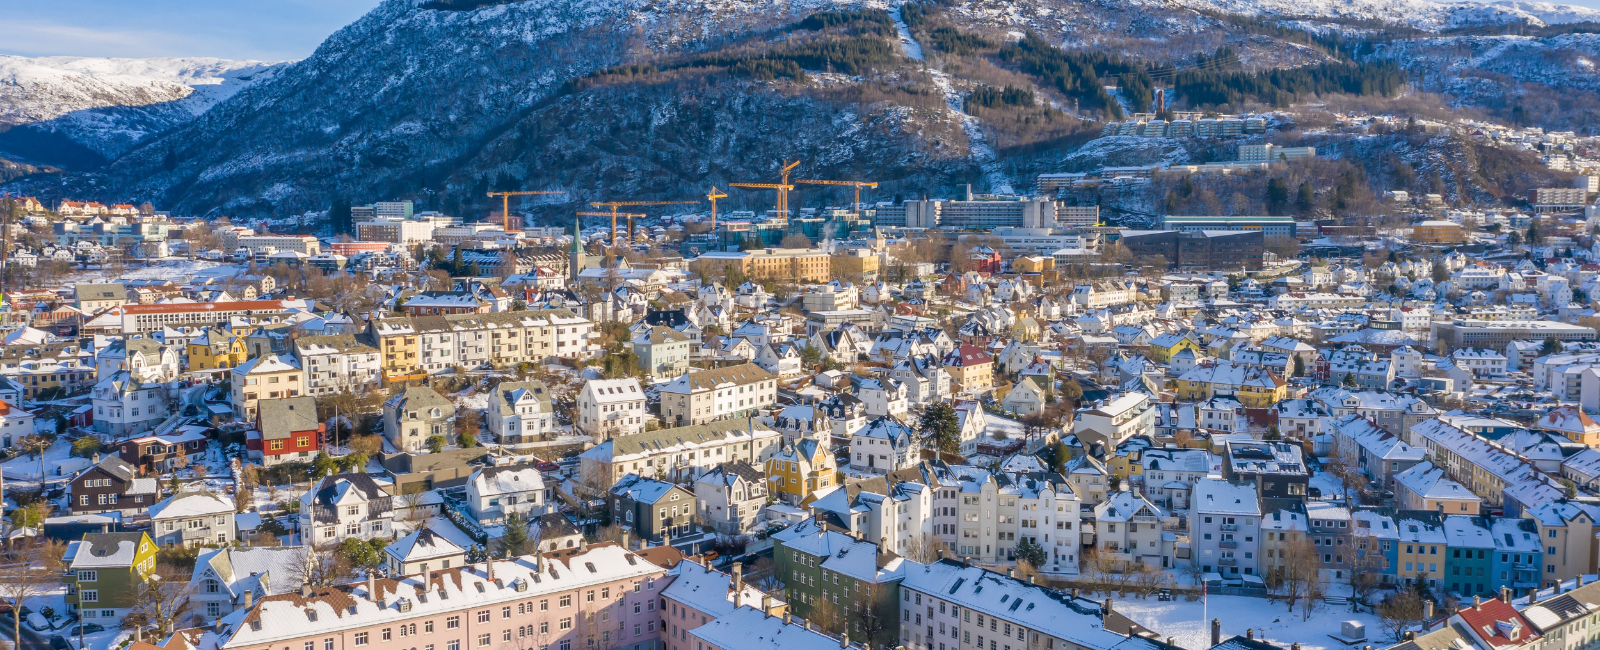 Bergen by Rune Haugseng via unsplash